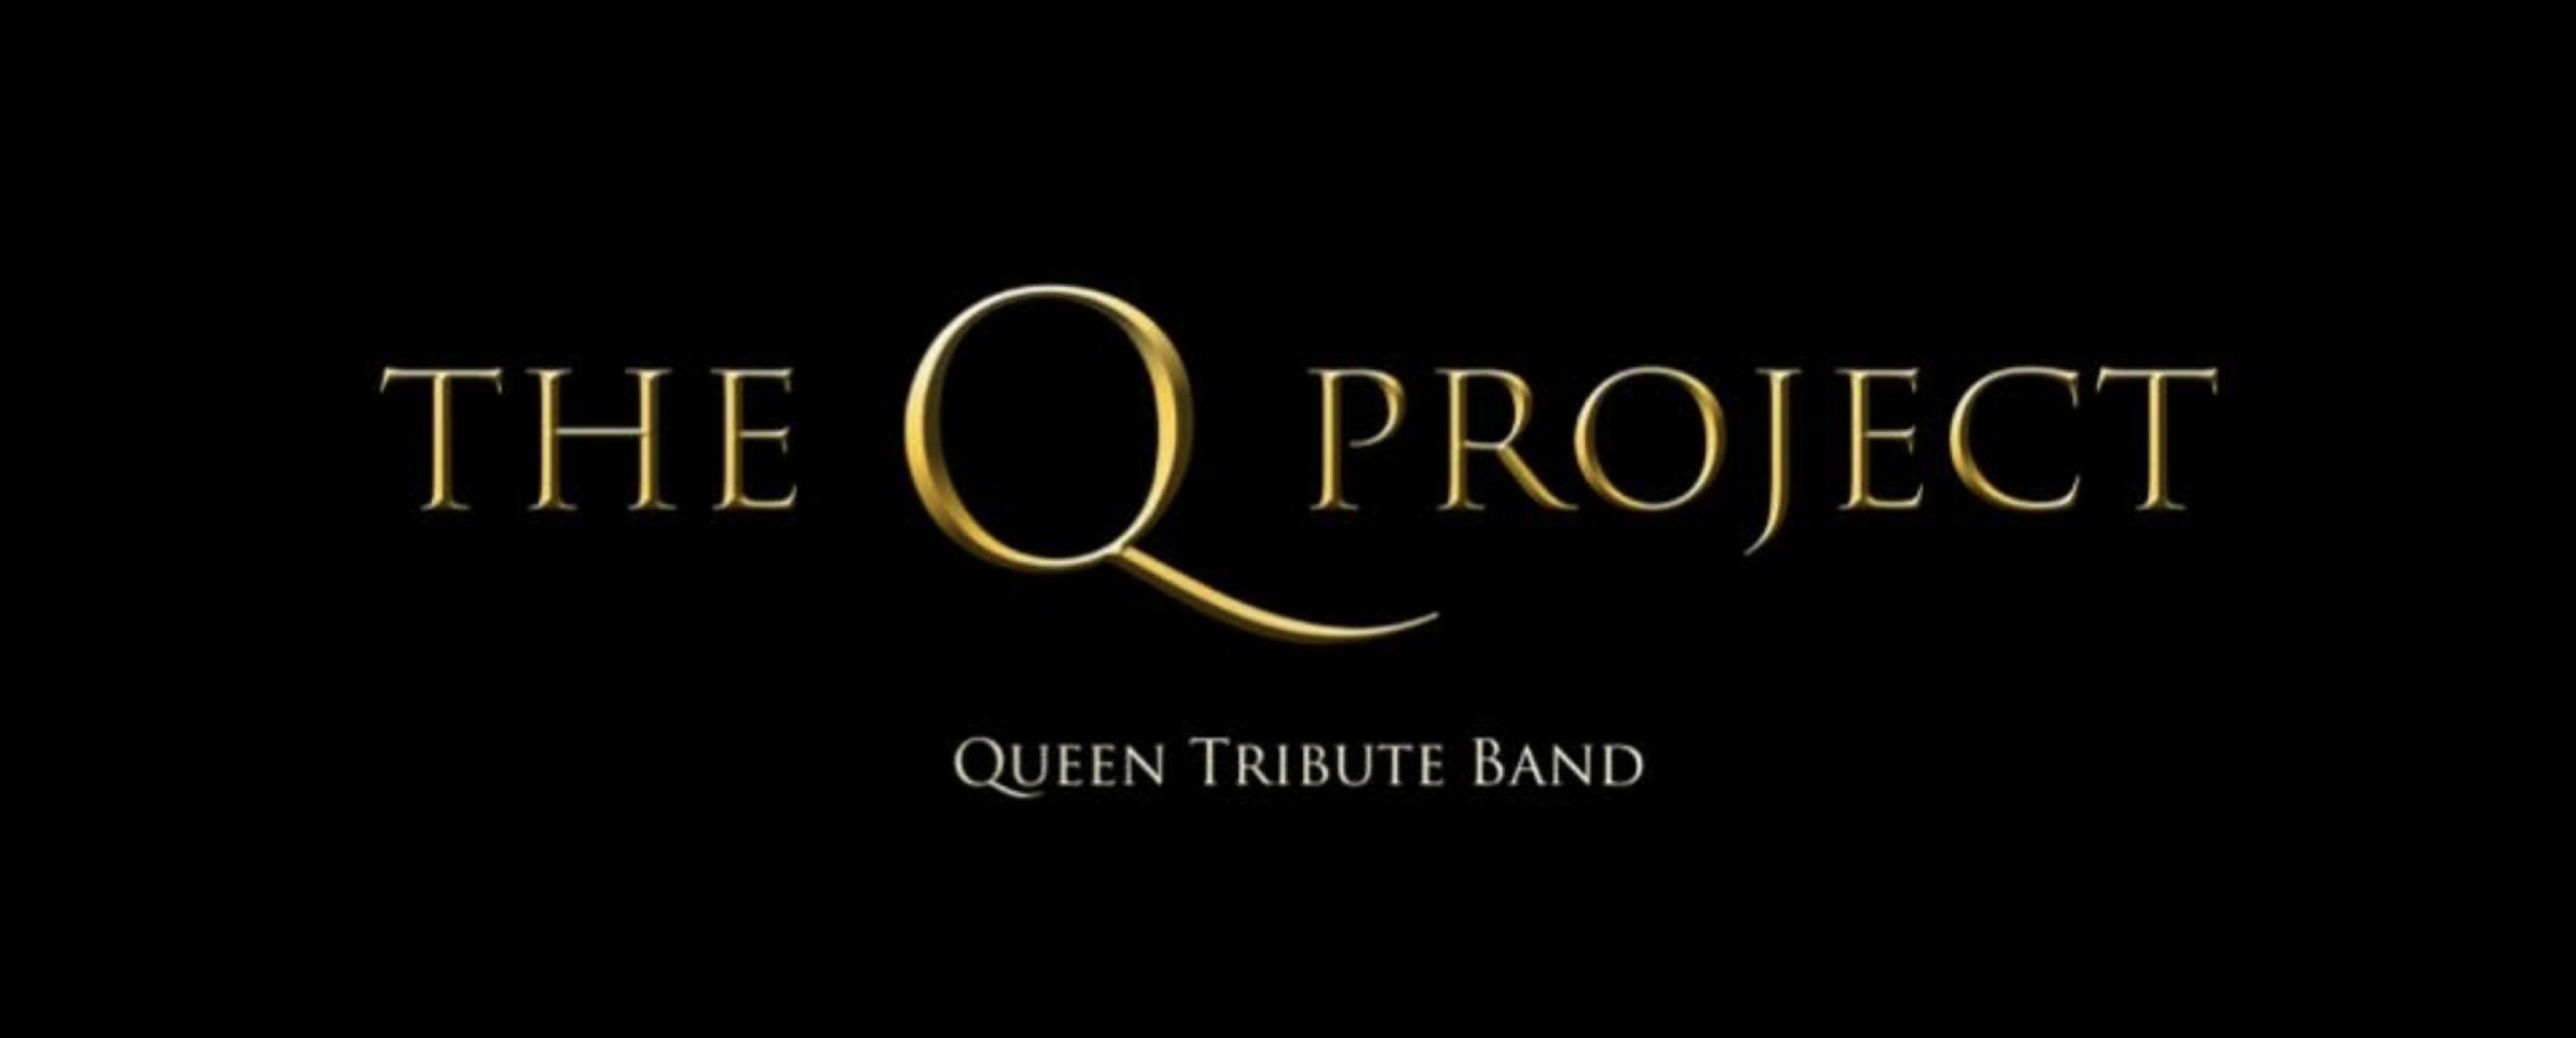 Kommt am Freitag, 28. Oktober 2022 nach Bozen: Die Queen-Tribute-Band The Q Project.